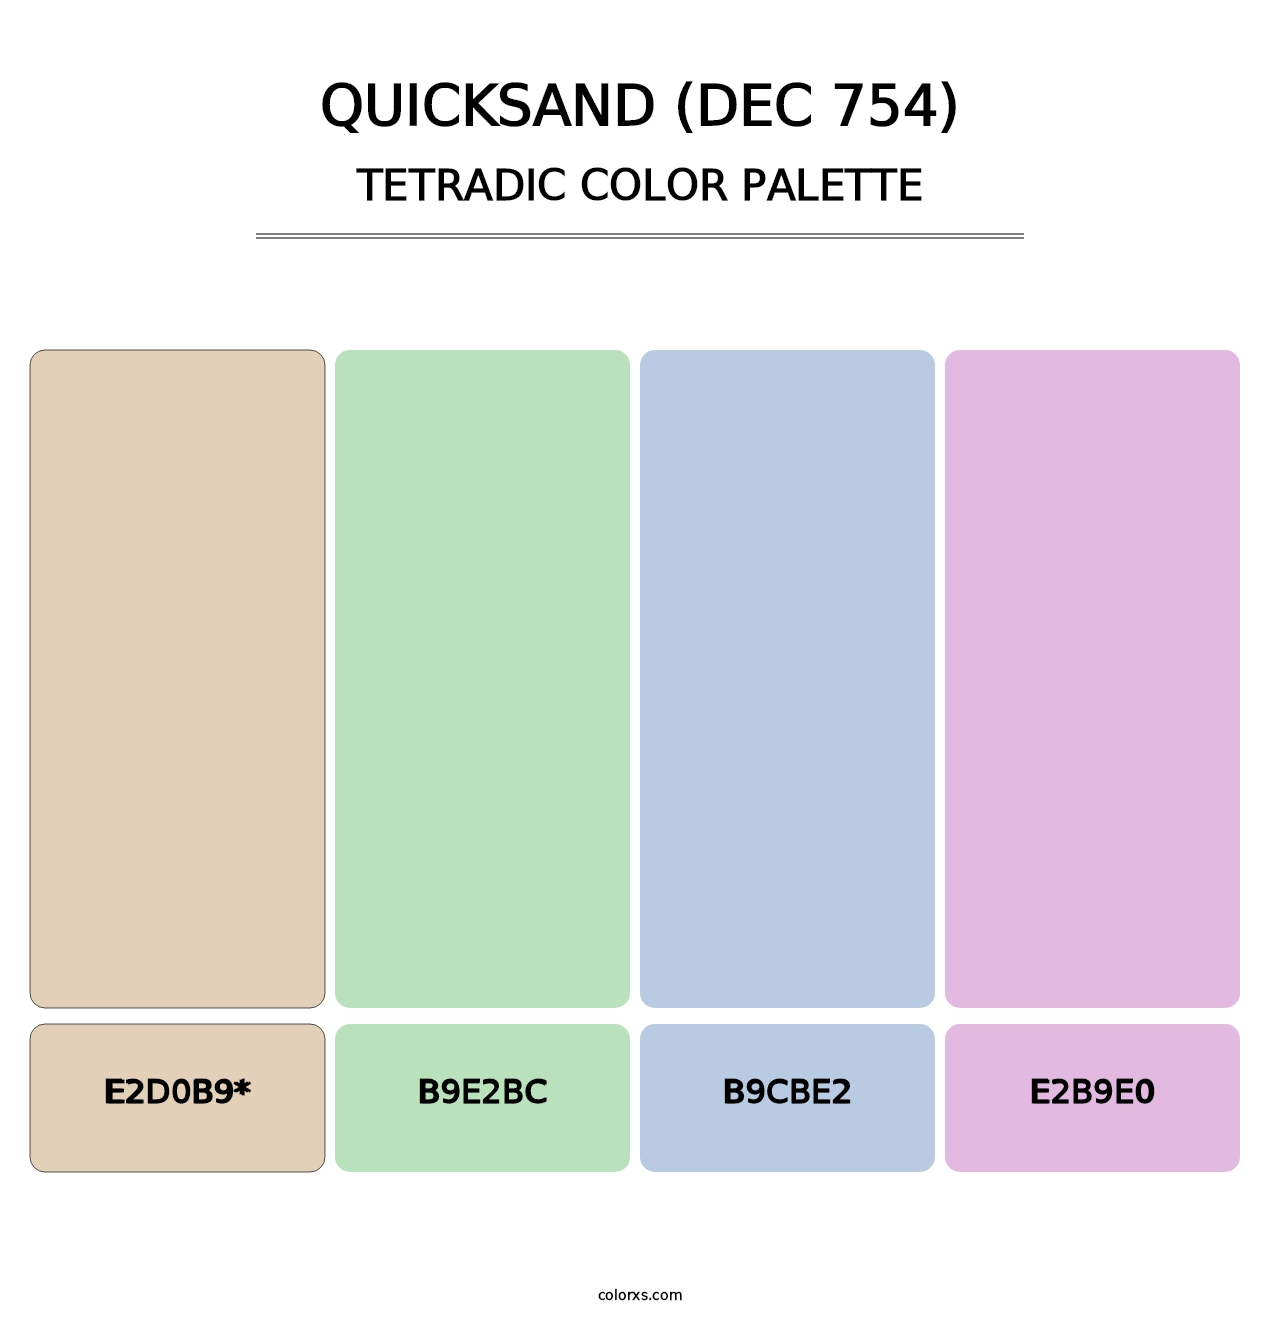 Quicksand (DEC 754) - Tetradic Color Palette